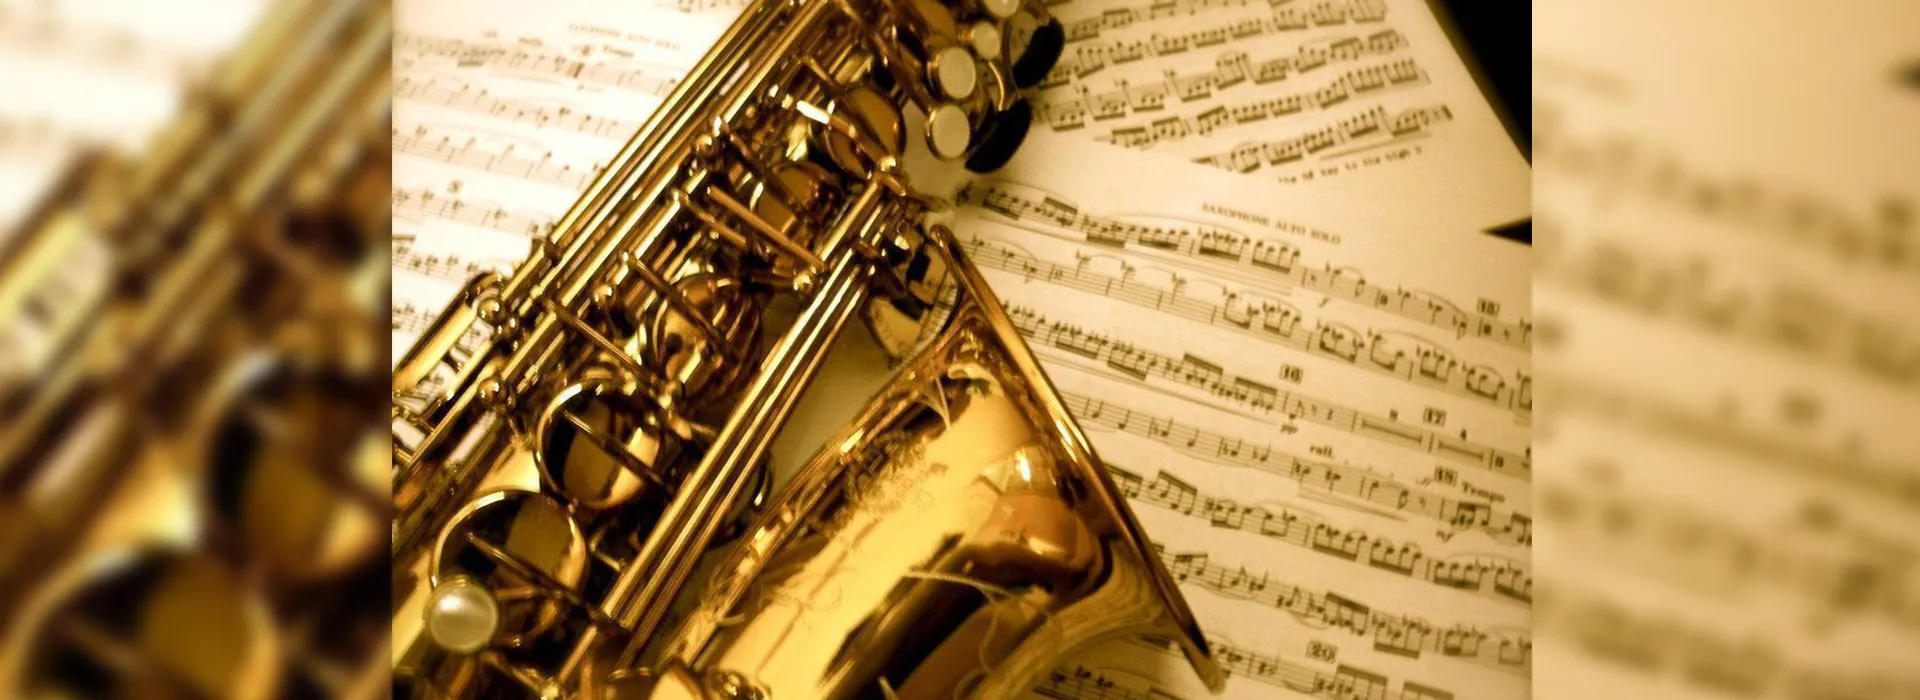 saxophone on a music sheet